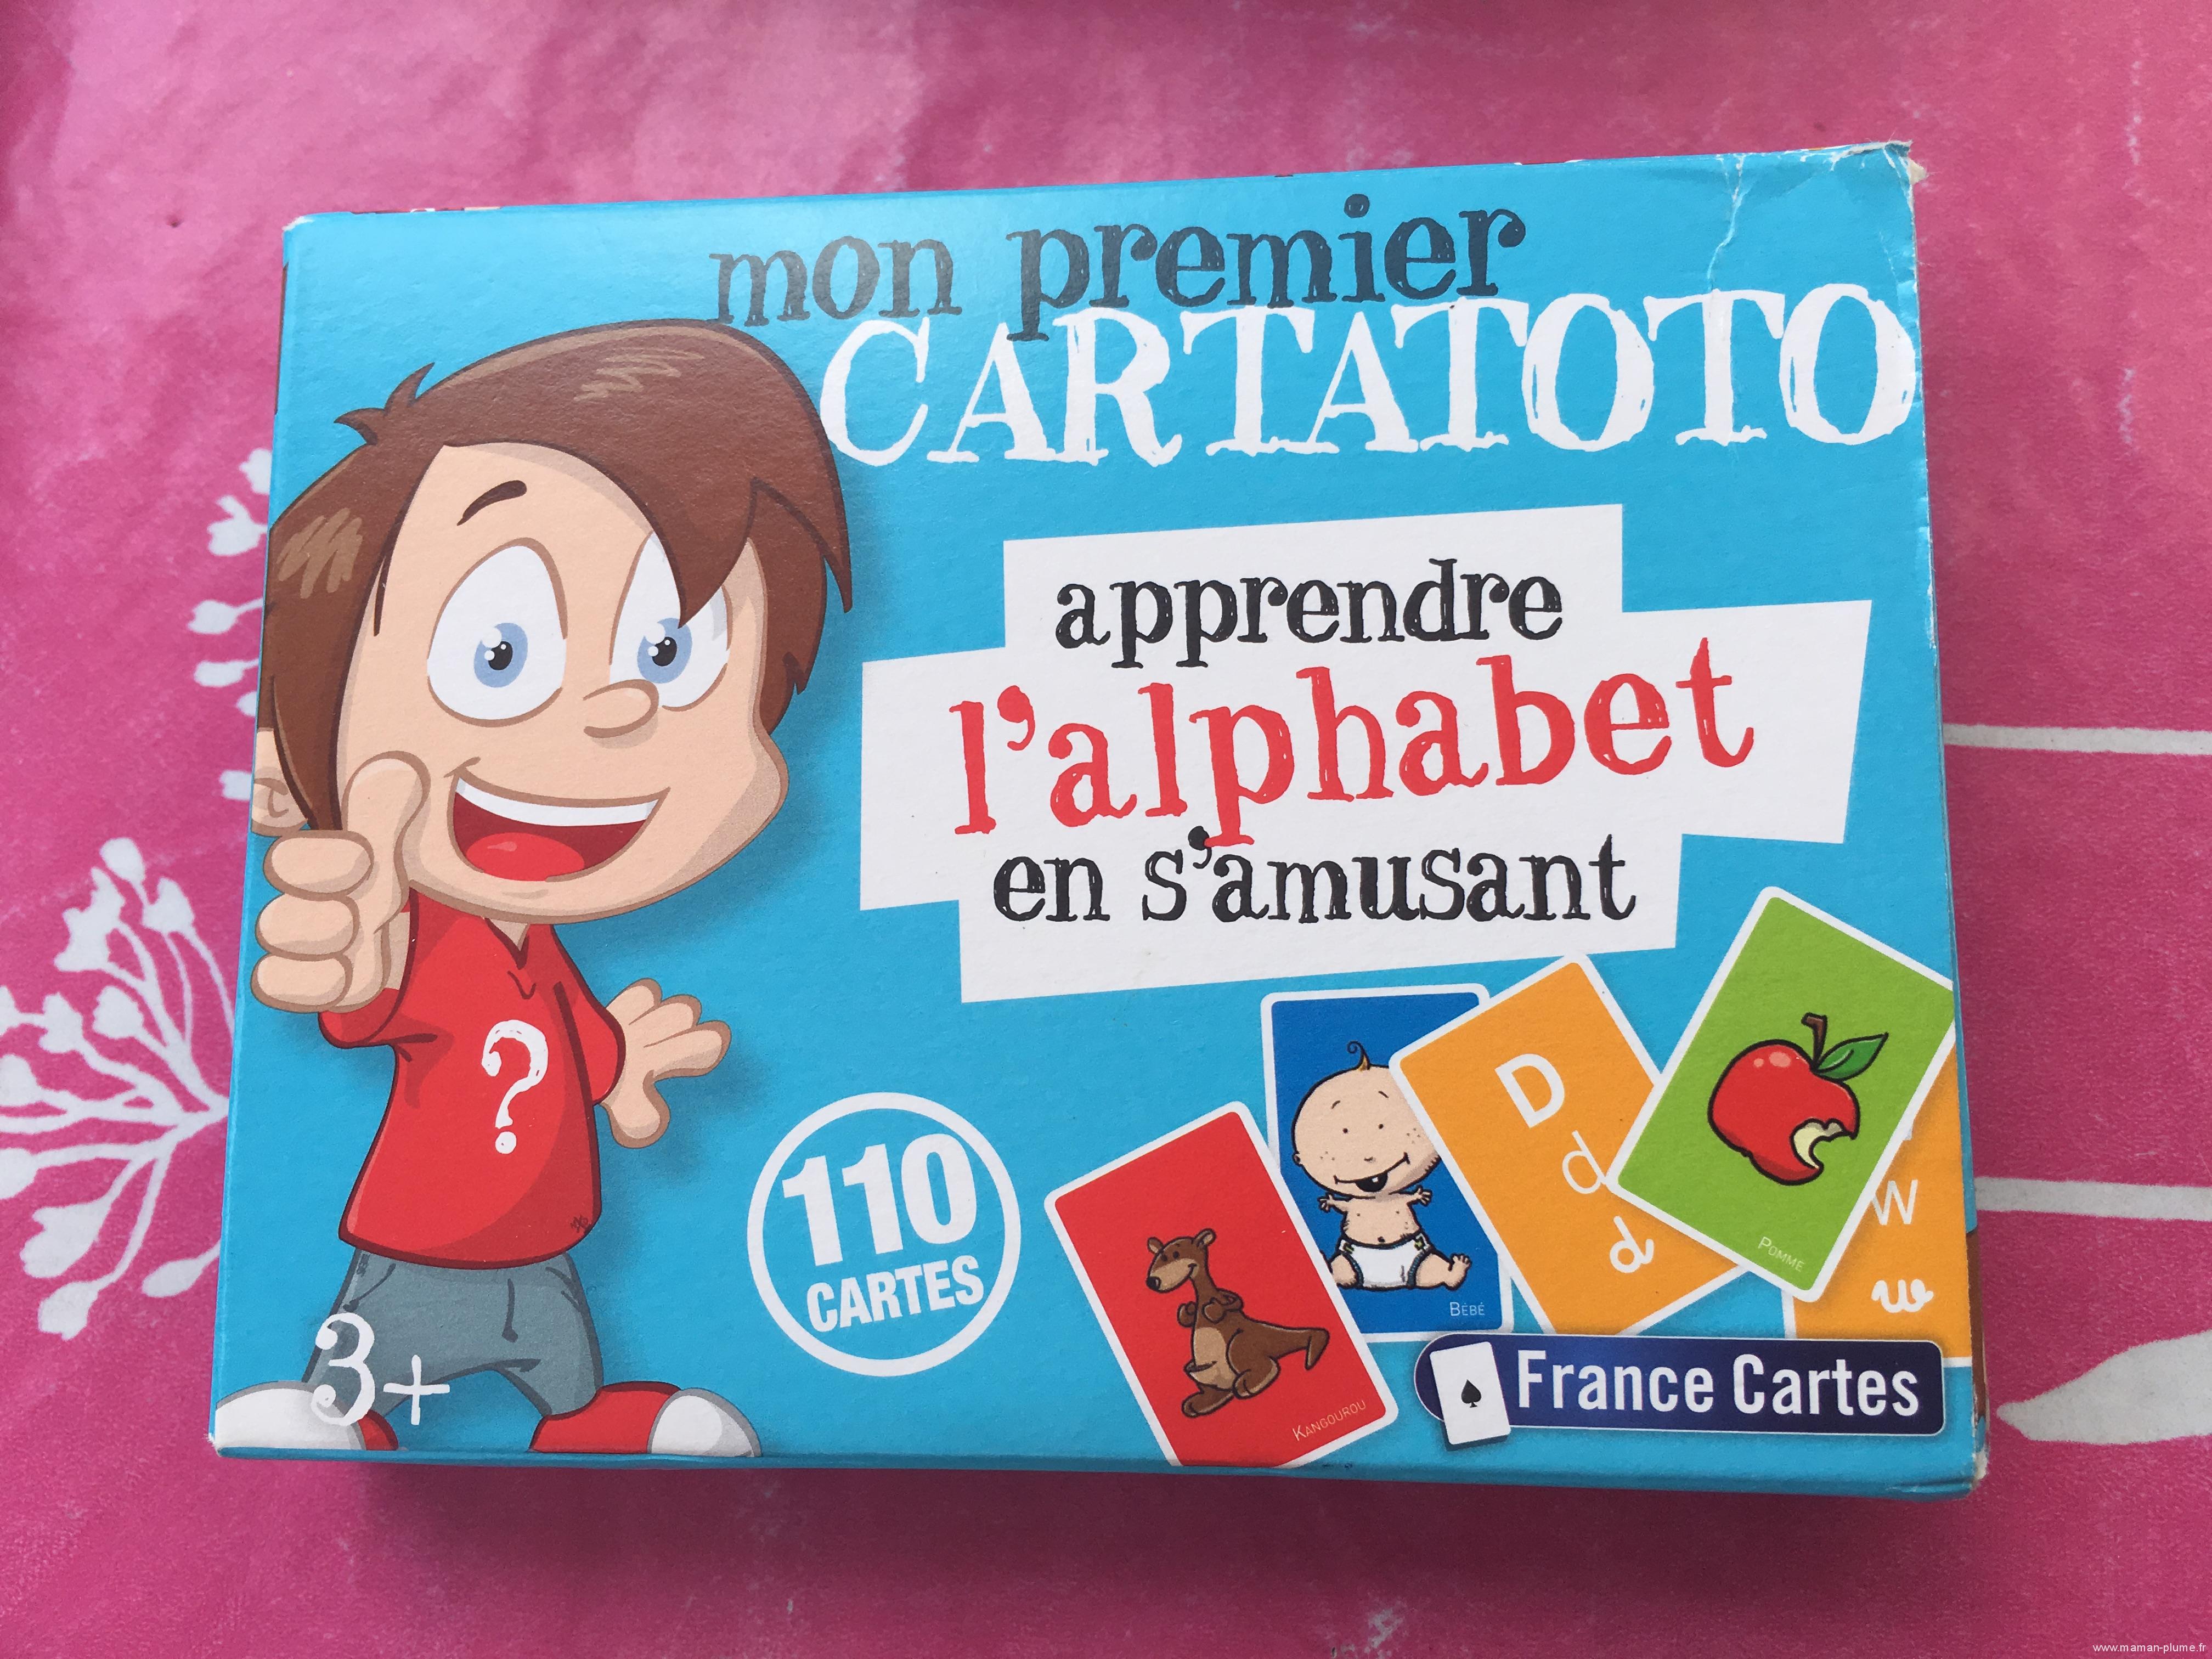 Cartatoto Monsieur Madame - L'Alphabet